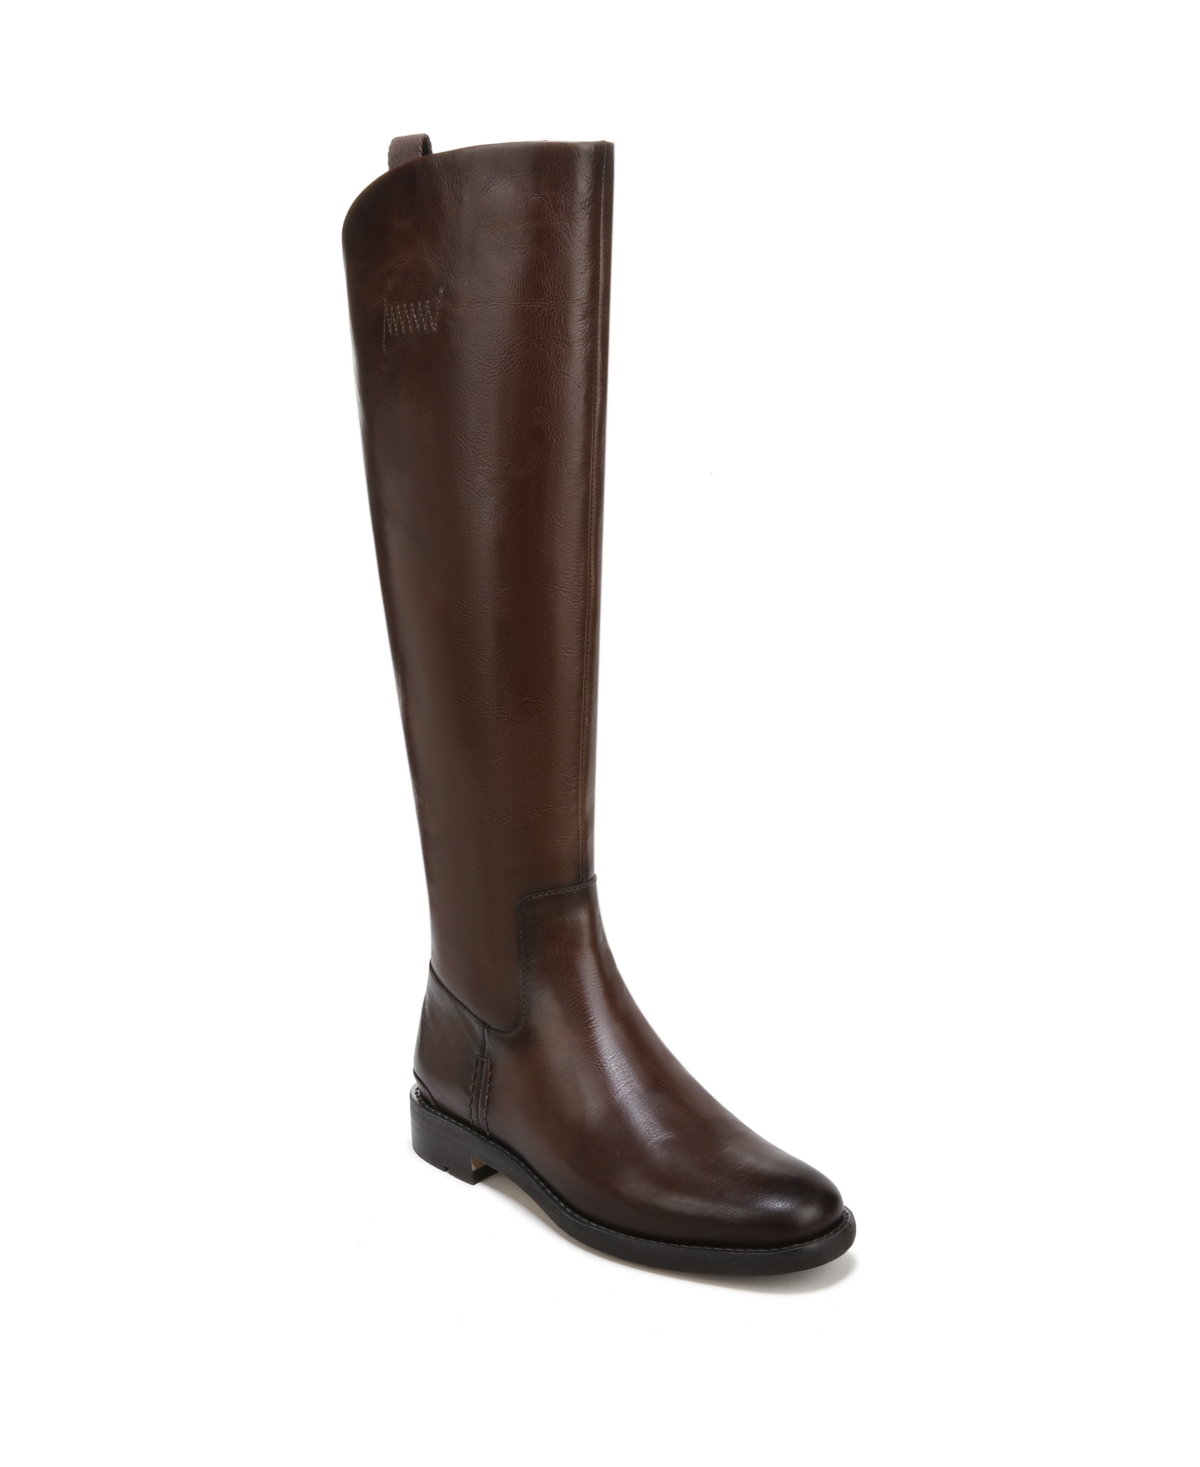 Meyer Narrow Calf Knee High Riding Boots - Tan Leather